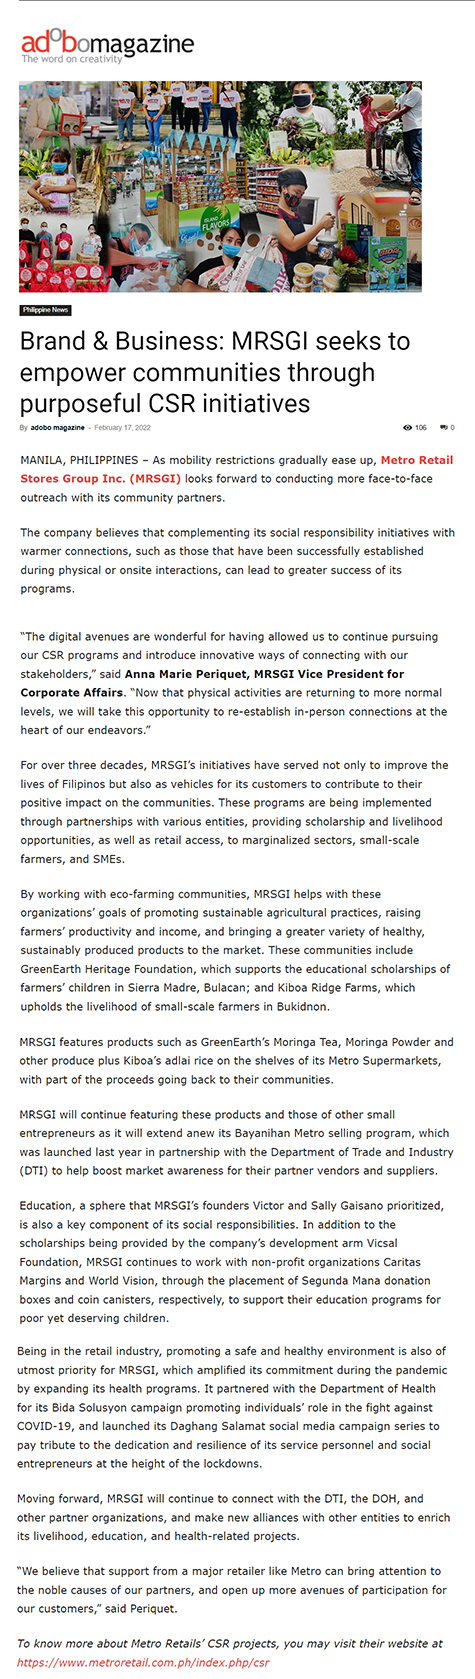 MRSGI seeks to empower communities through purposeful CSR initiatives